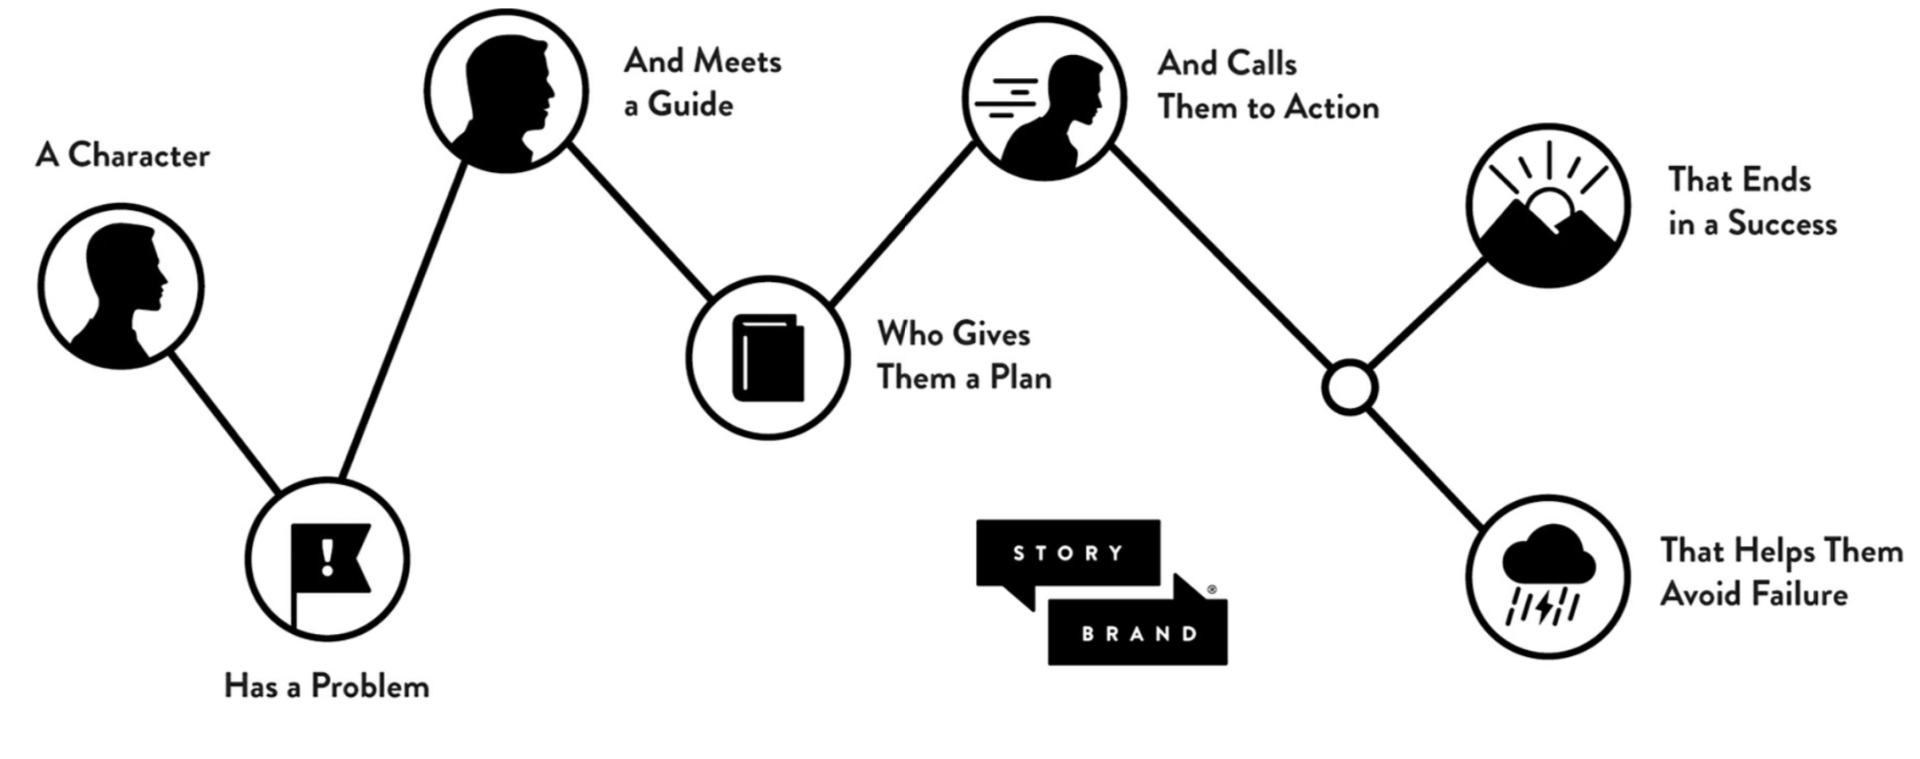 Mawazo Marketing storybrand framework in blog